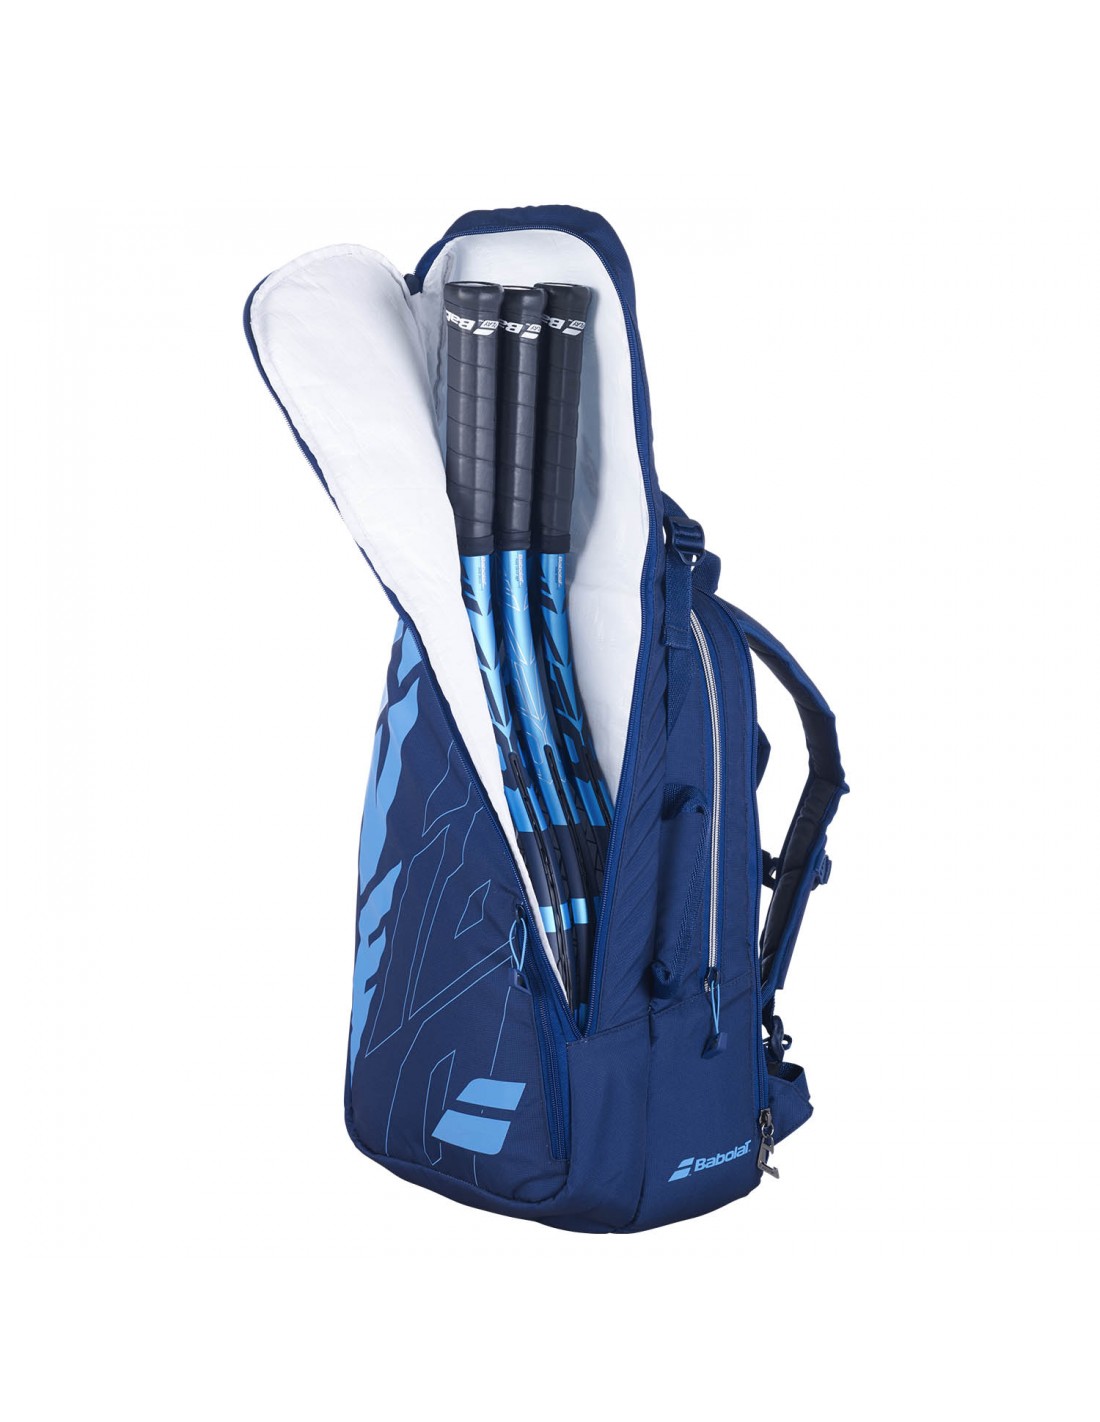 HEAD Bolsa de tenis Original para hombre, mochila con compartimento para  zapatos, 6 raquetas paleteros padel mochila padel tenis mochila padel  hombre